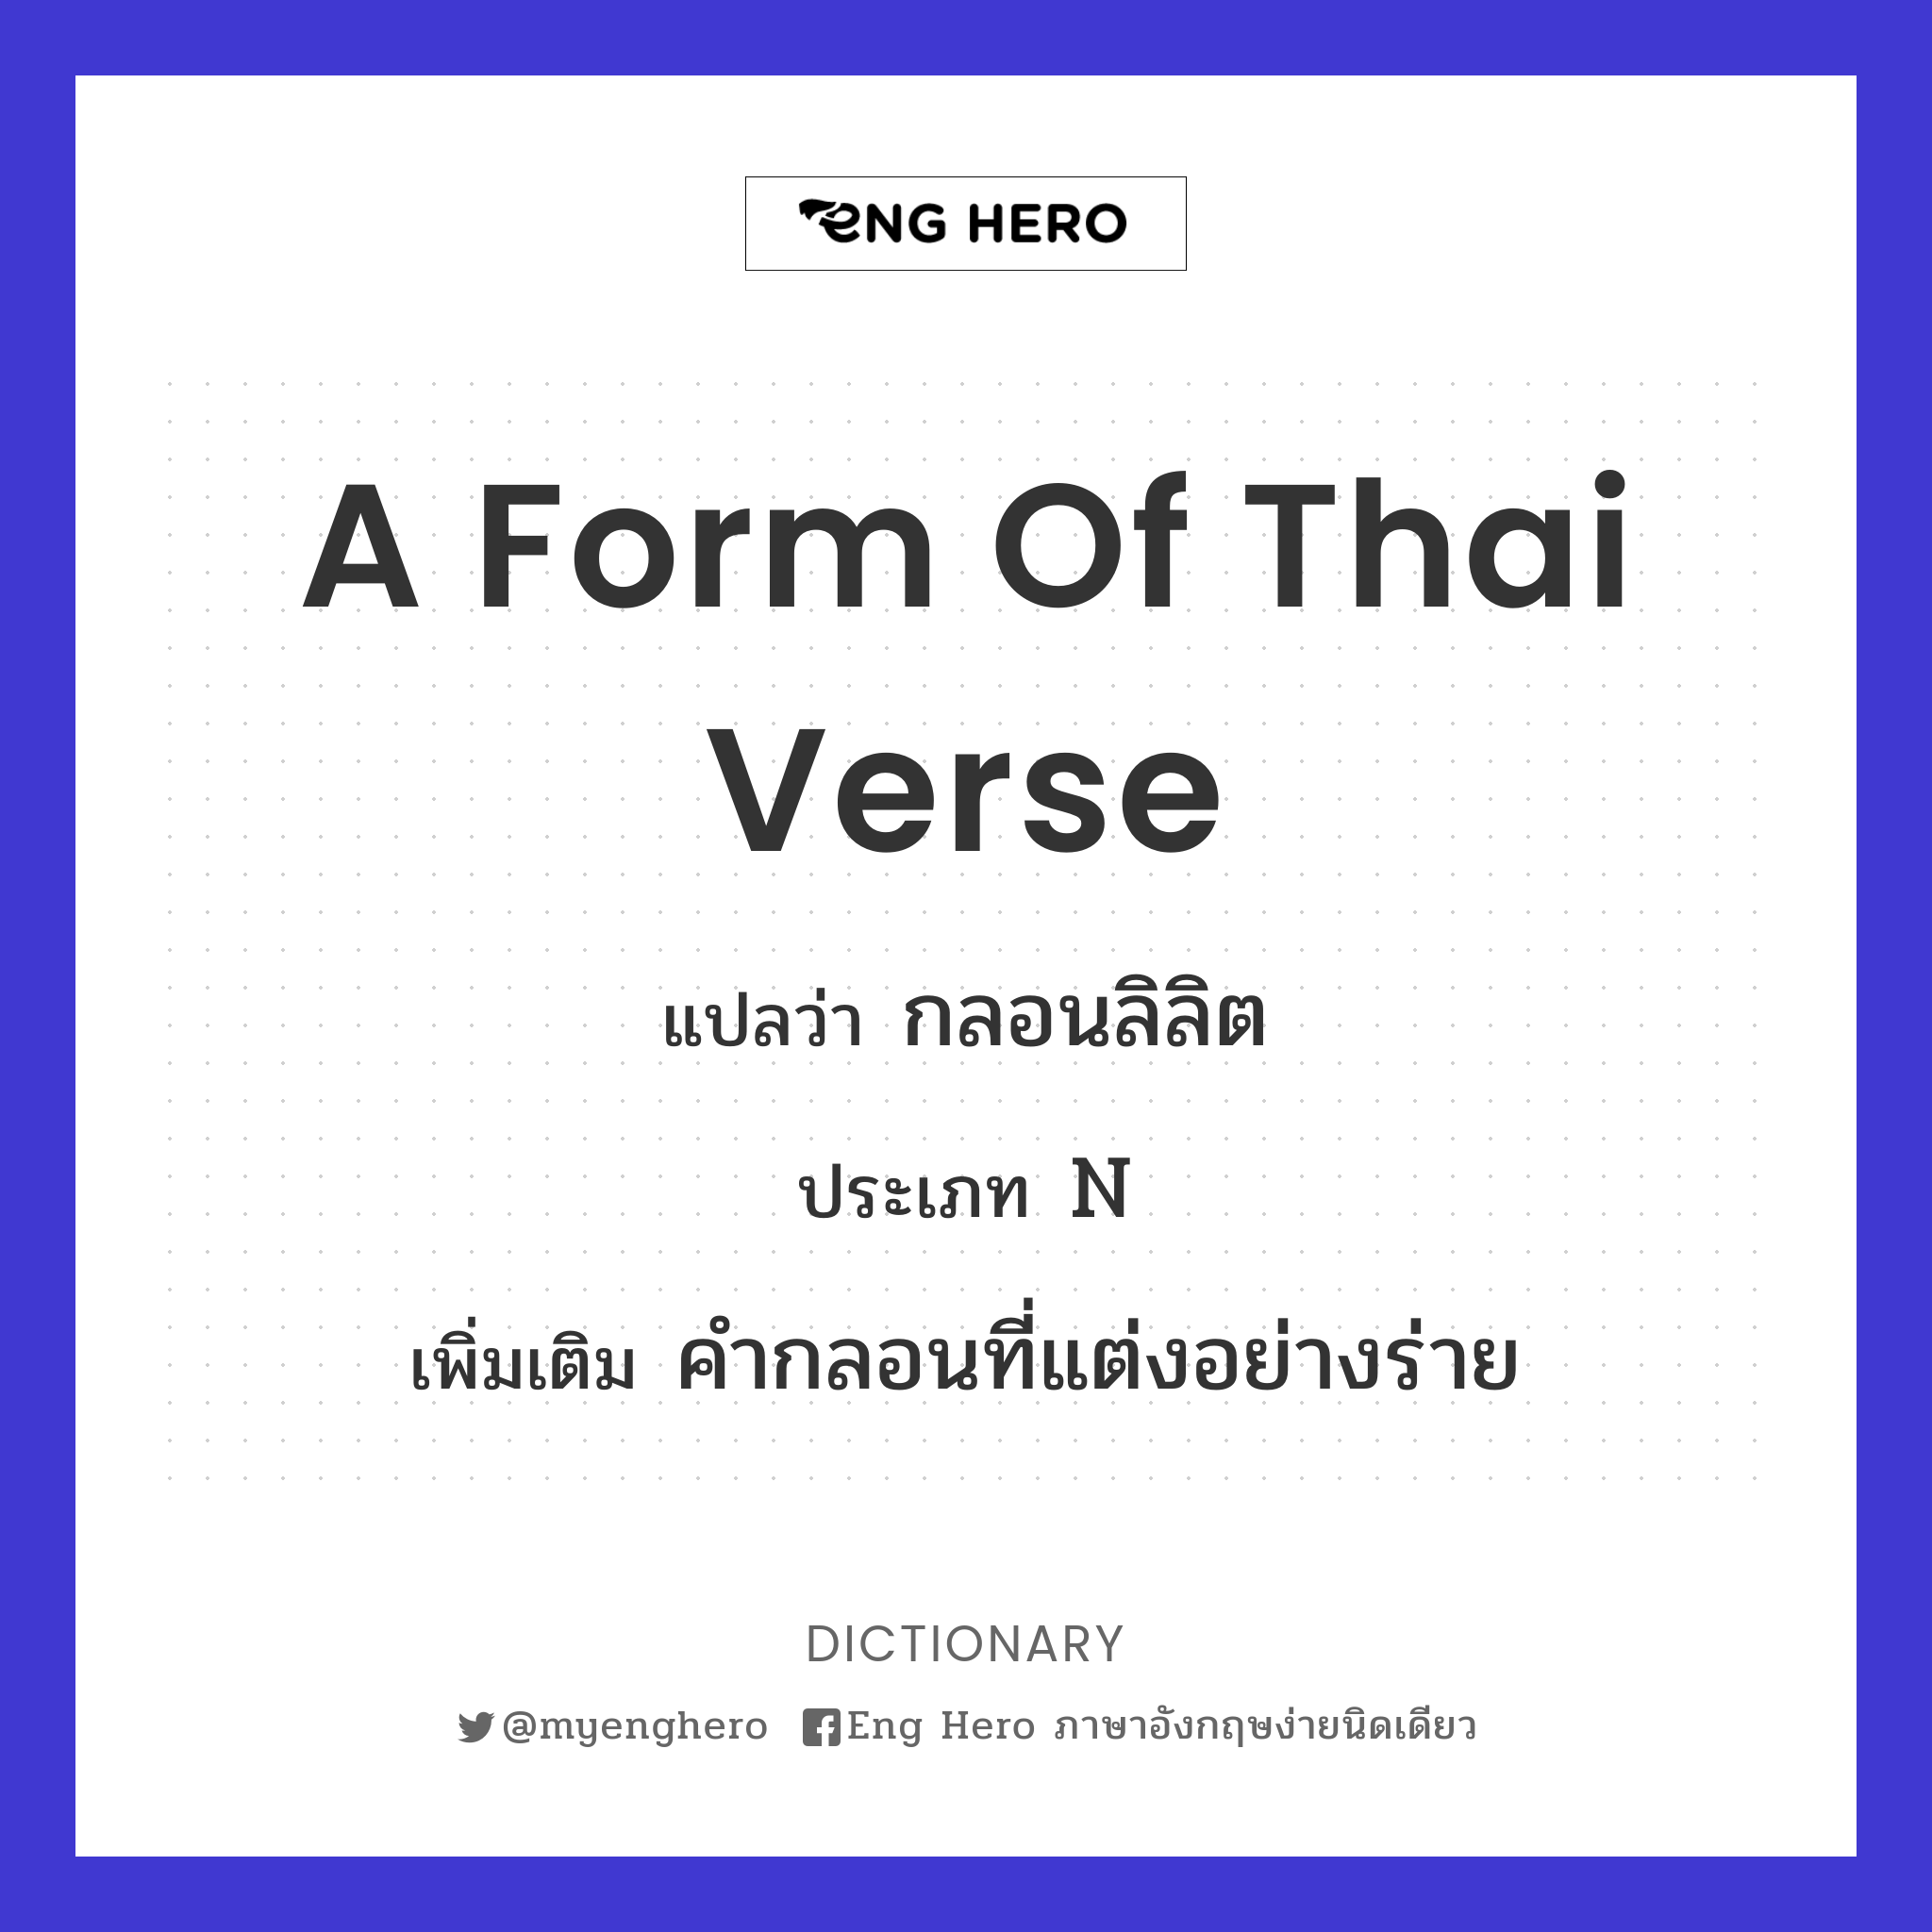 a form of Thai verse